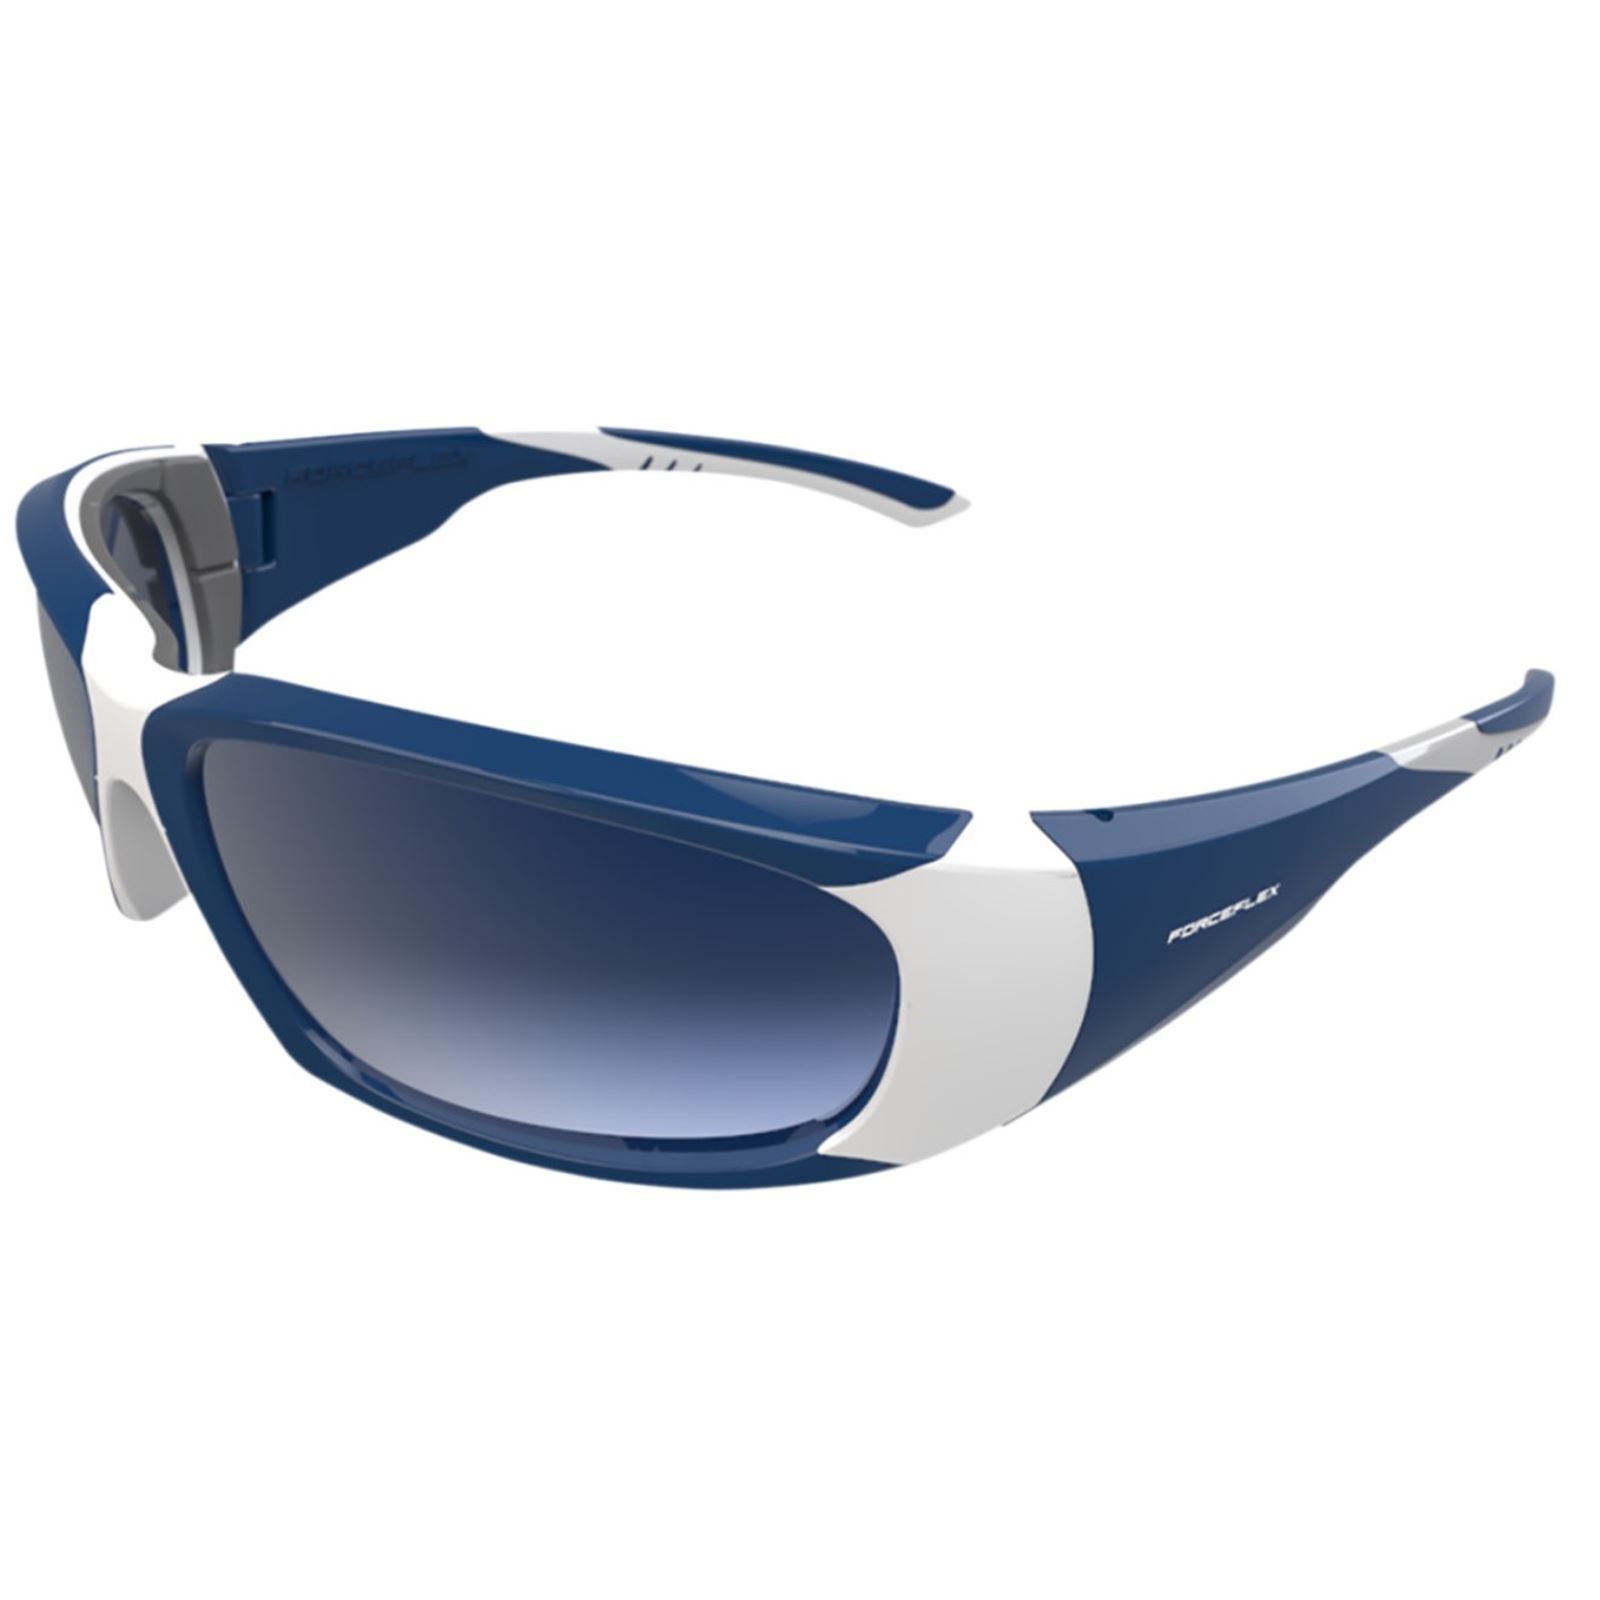 Forceflex Floating Sunglasses - Blue/White